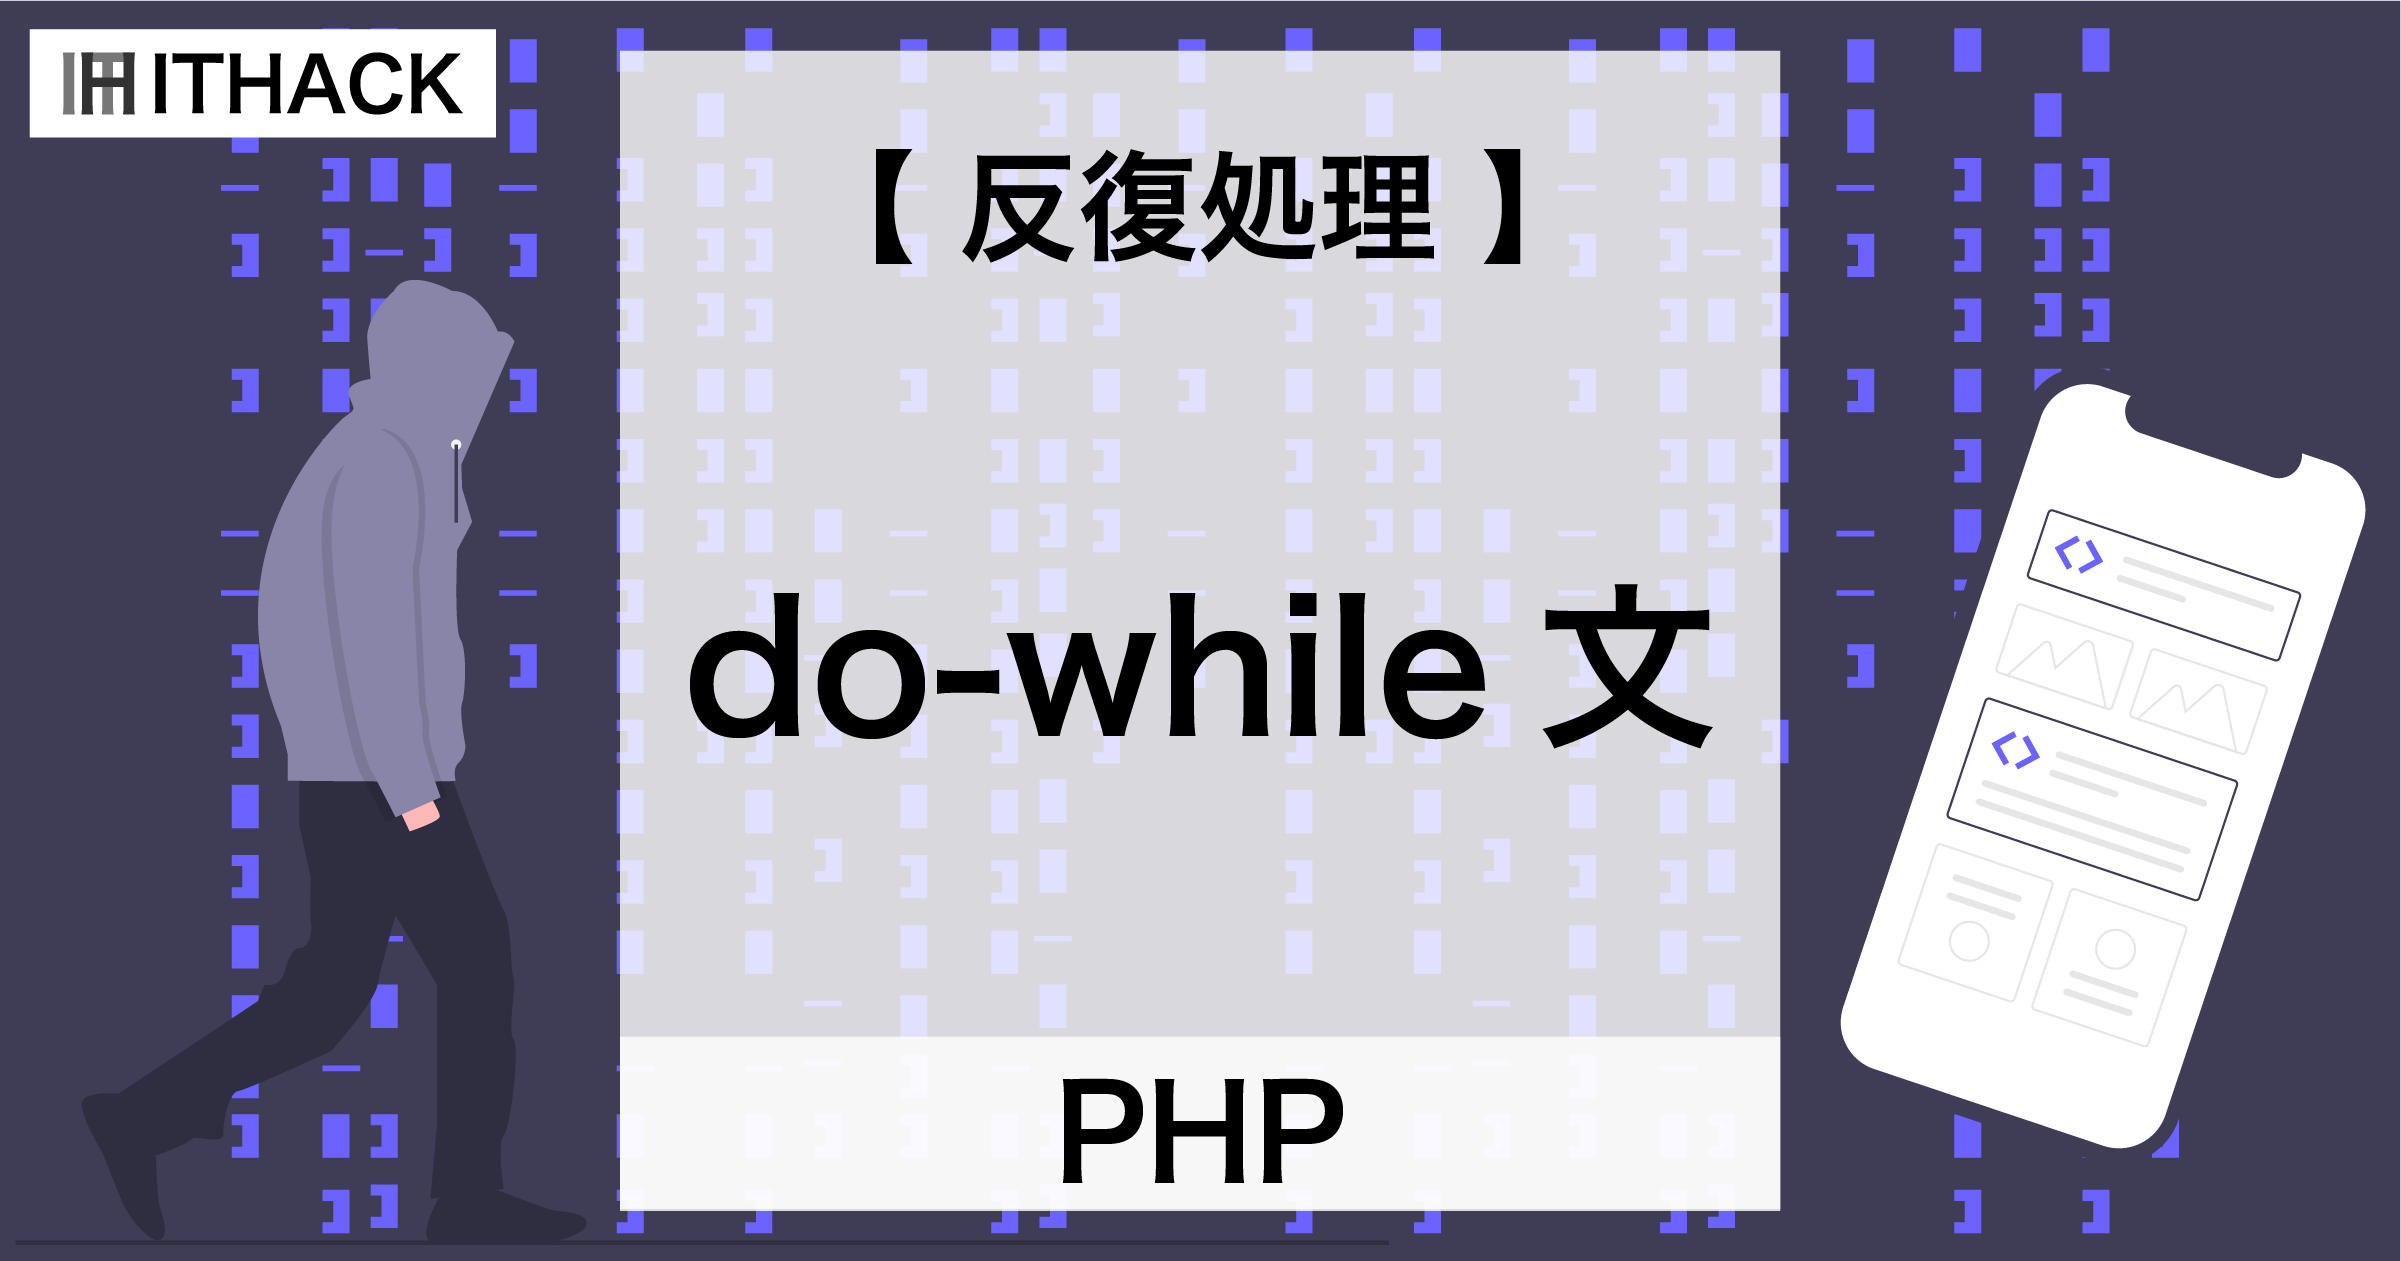 【PHP】do-while文 - 反復処理 / １度は必ず繰り返し処理を実行する処理